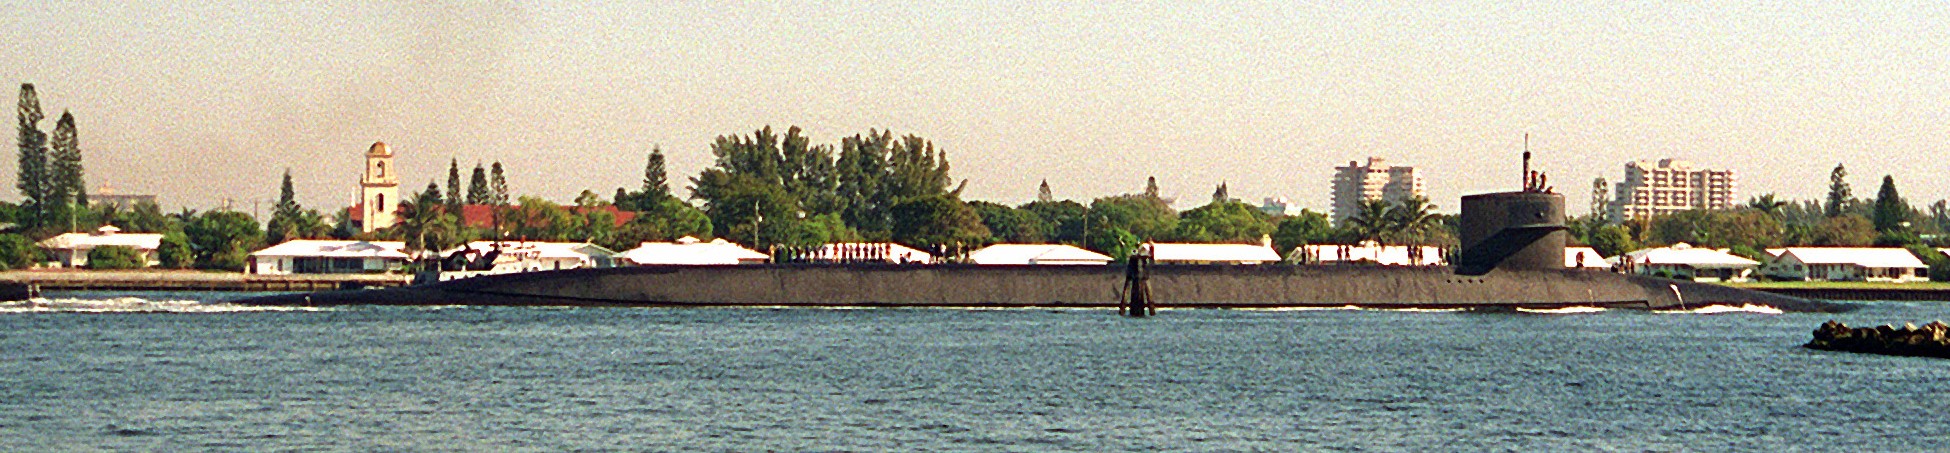 ssbn-728 uss florida ballistic missile submarine us navy 1995 62